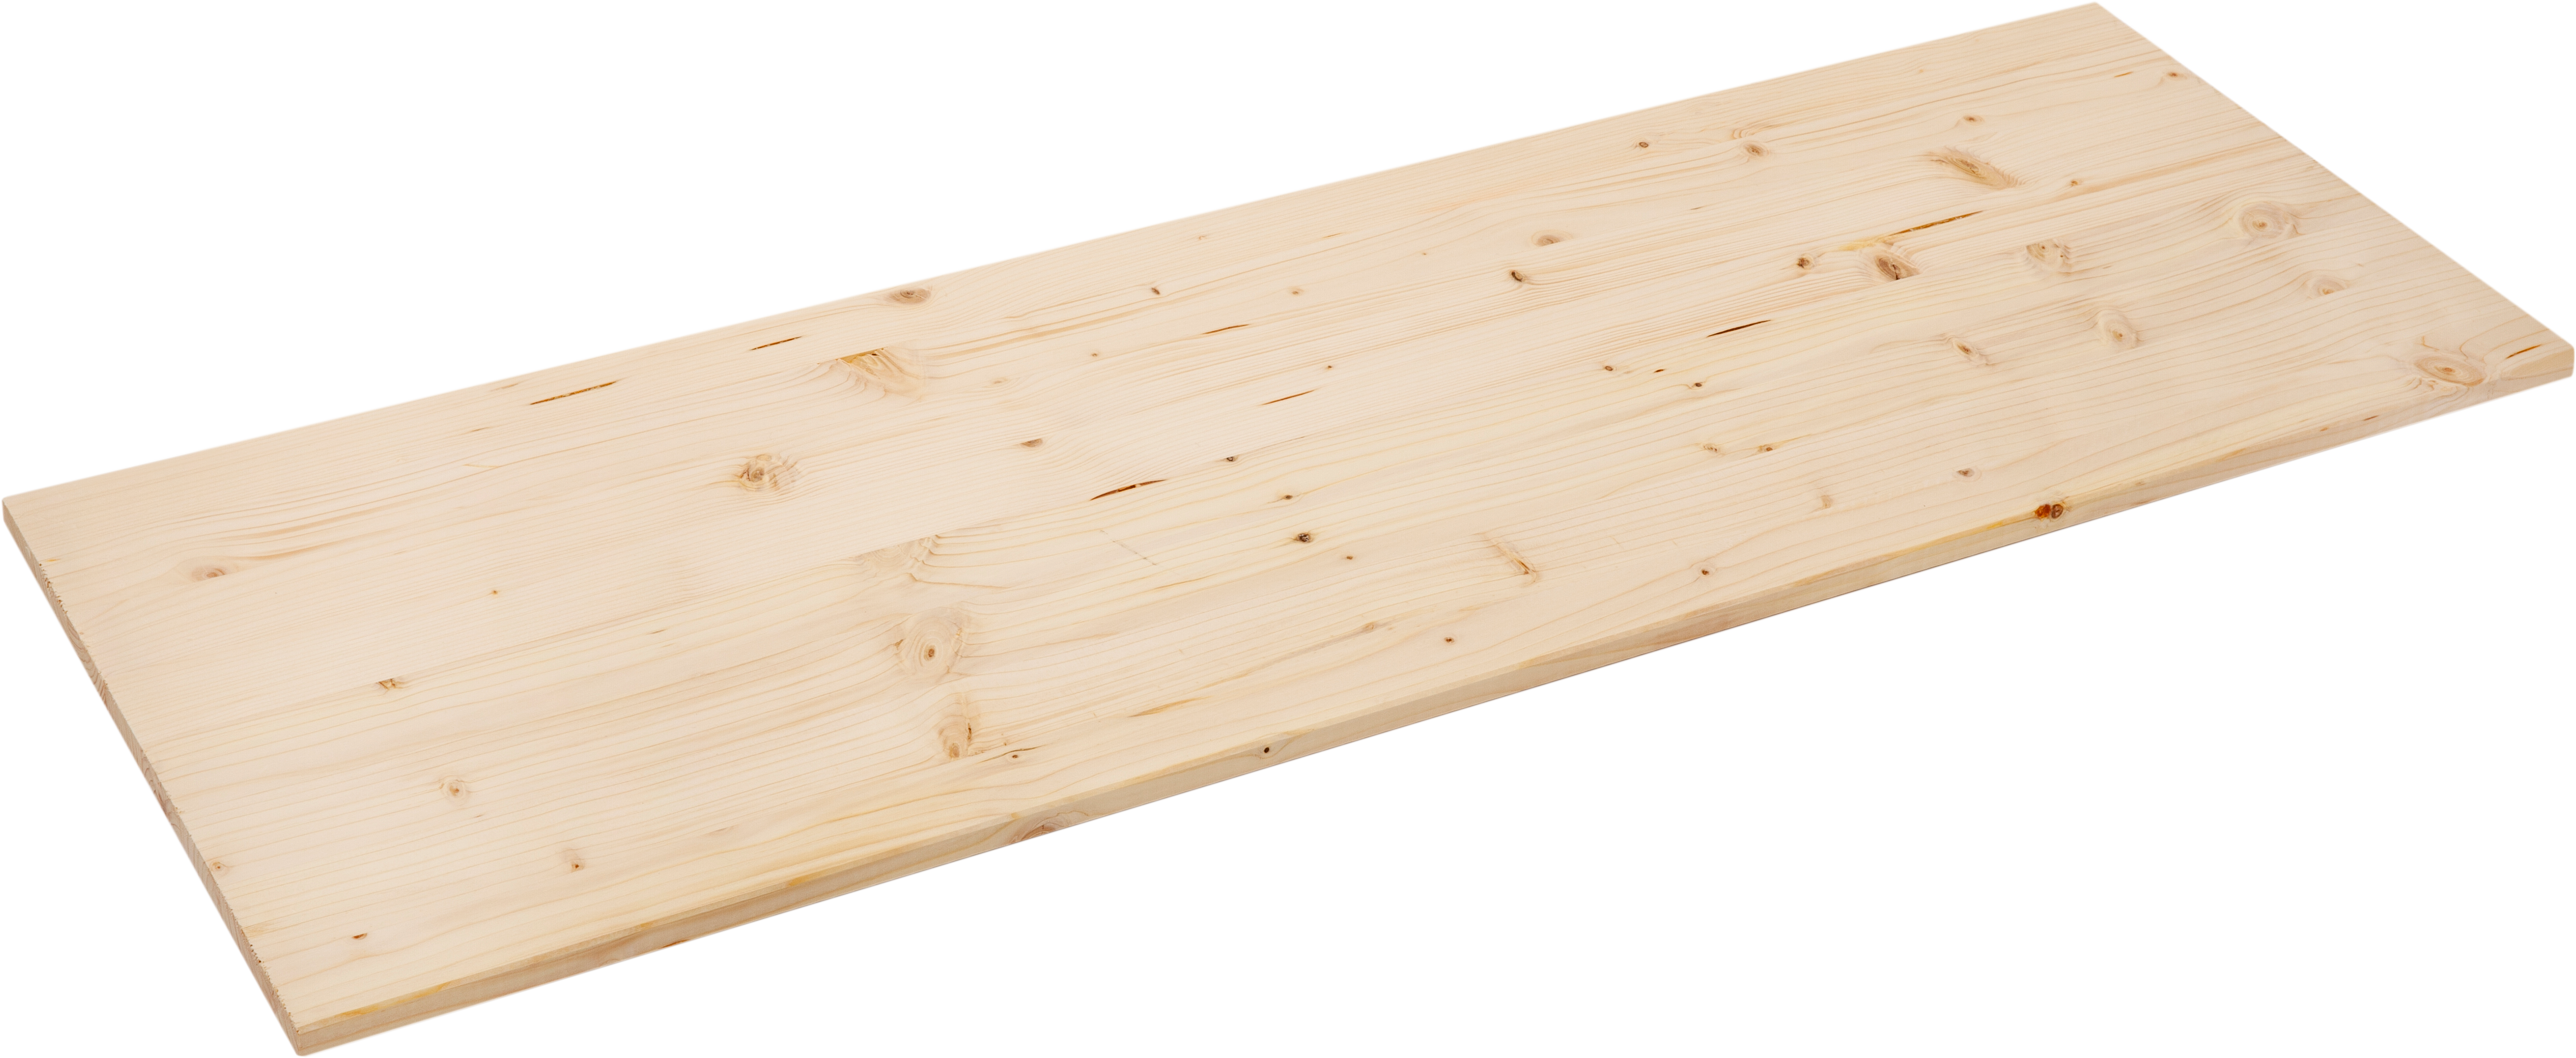 ▷5 ideas con tablones de madera - Blog Snap a Thing